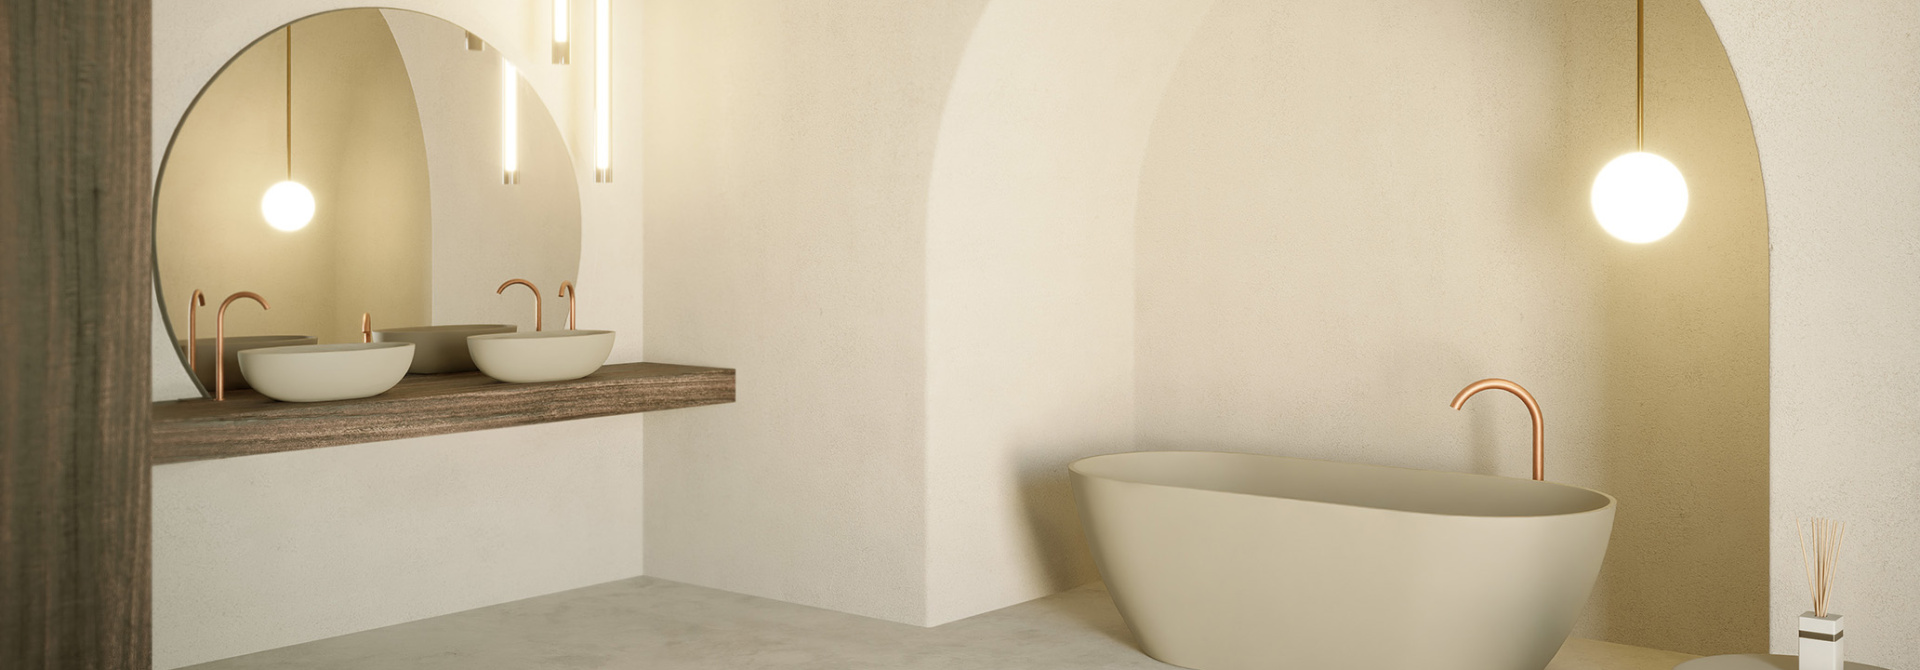 RIHO-bathroom-trends-beige-bathroom-boho-ton-sur-ton.jpg